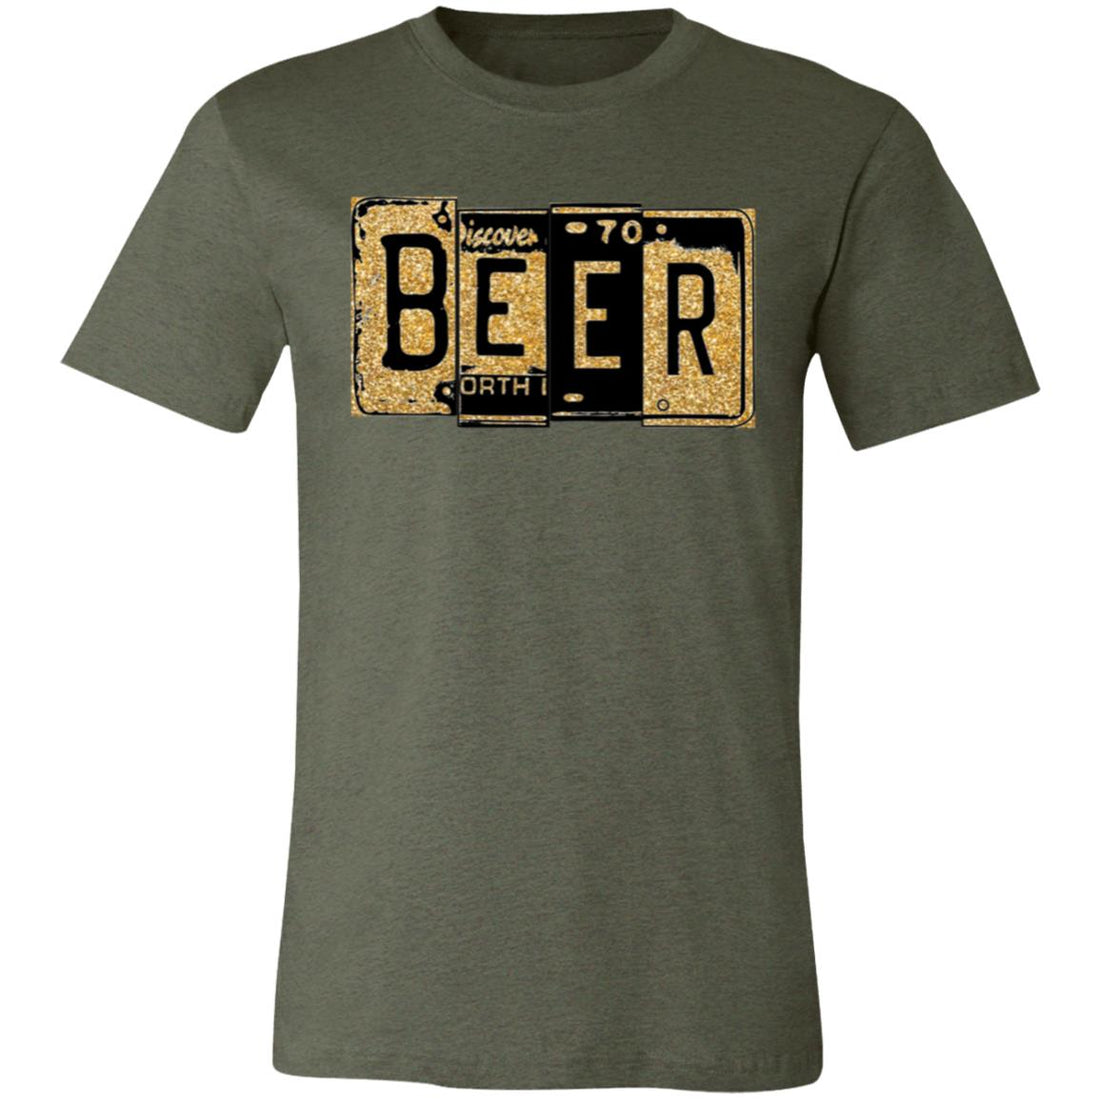 Beer Plates Short-Sleeve T-Shirt - T-Shirts - Positively Sassy - Beer Plates Short-Sleeve T-Shirt